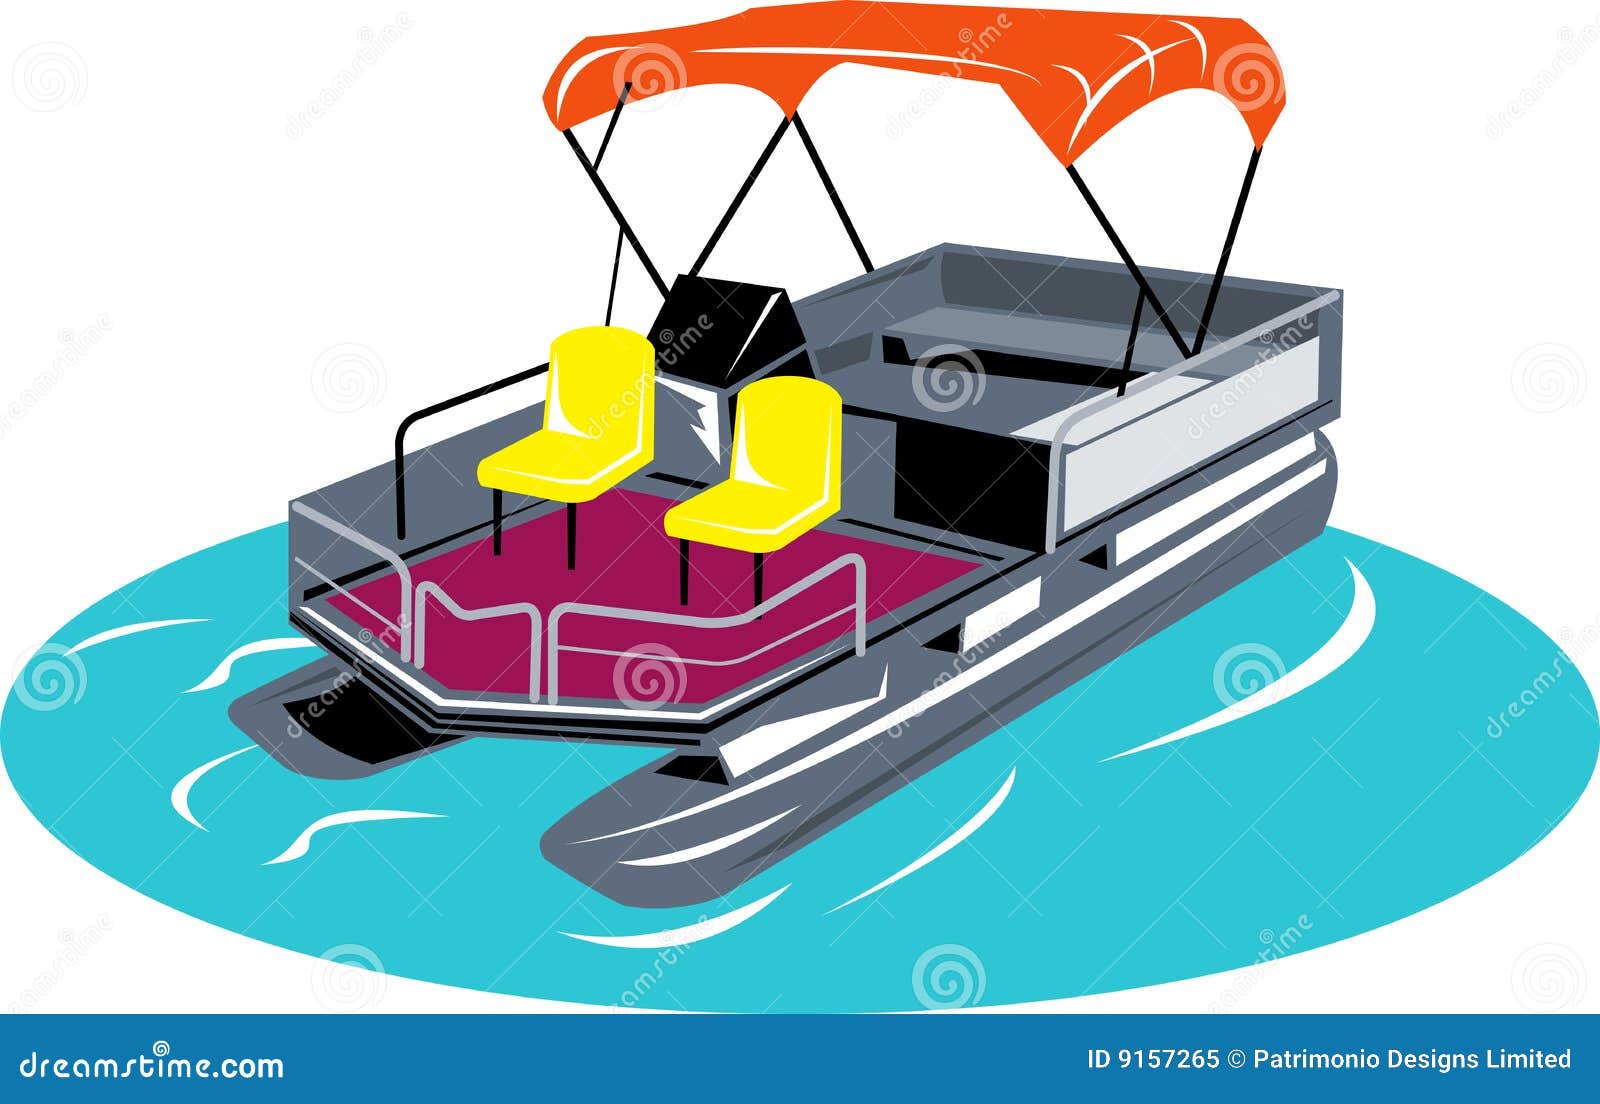 pontoon boat